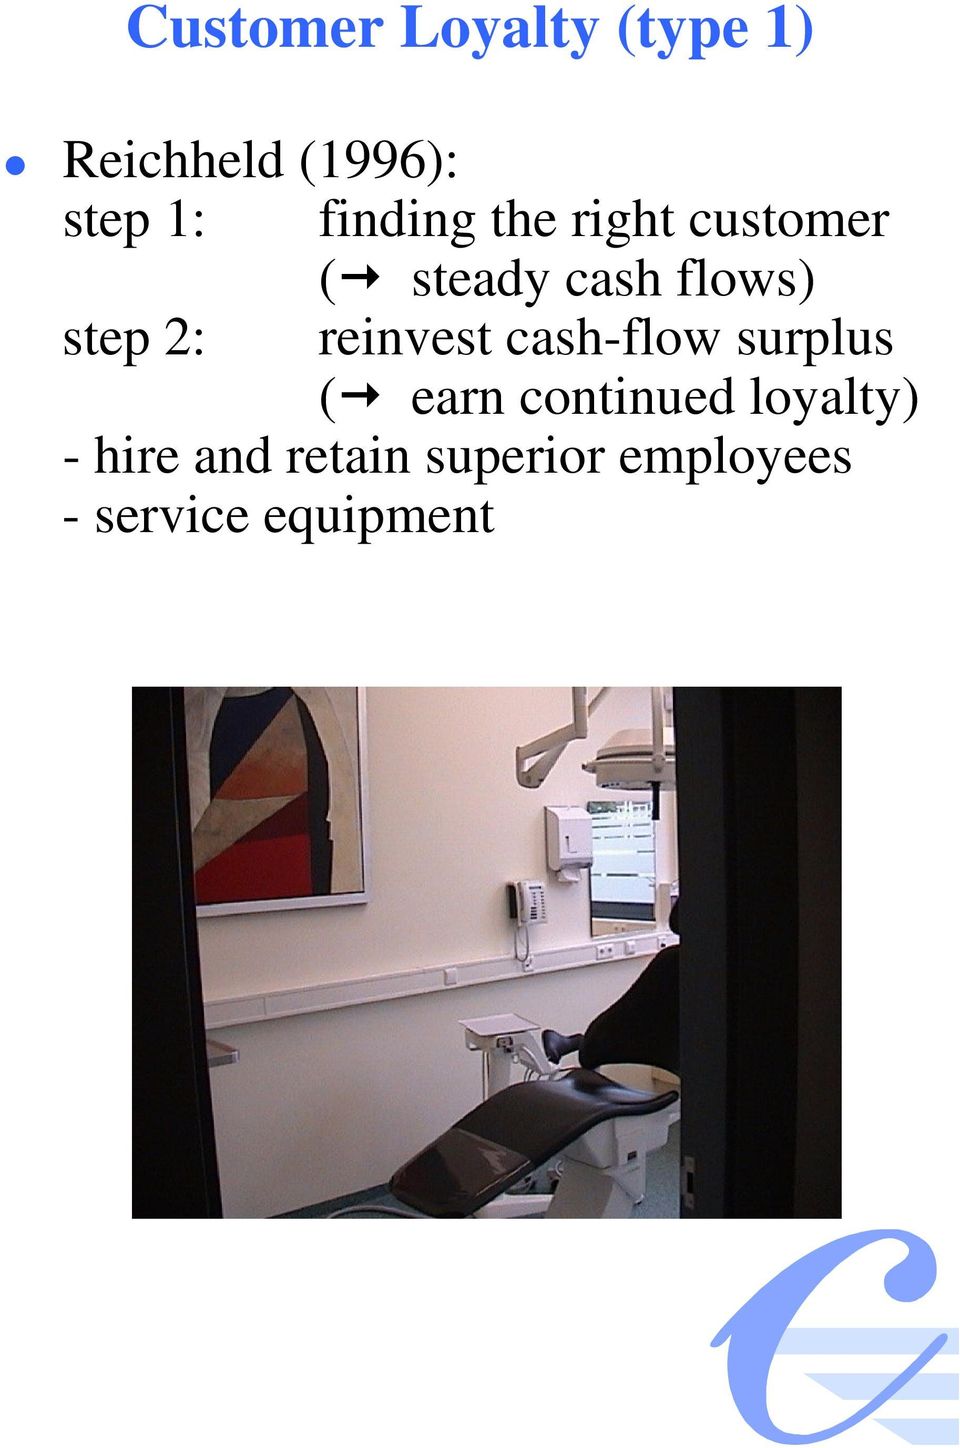 2: reinvest cash-flow surplus ( earn continued